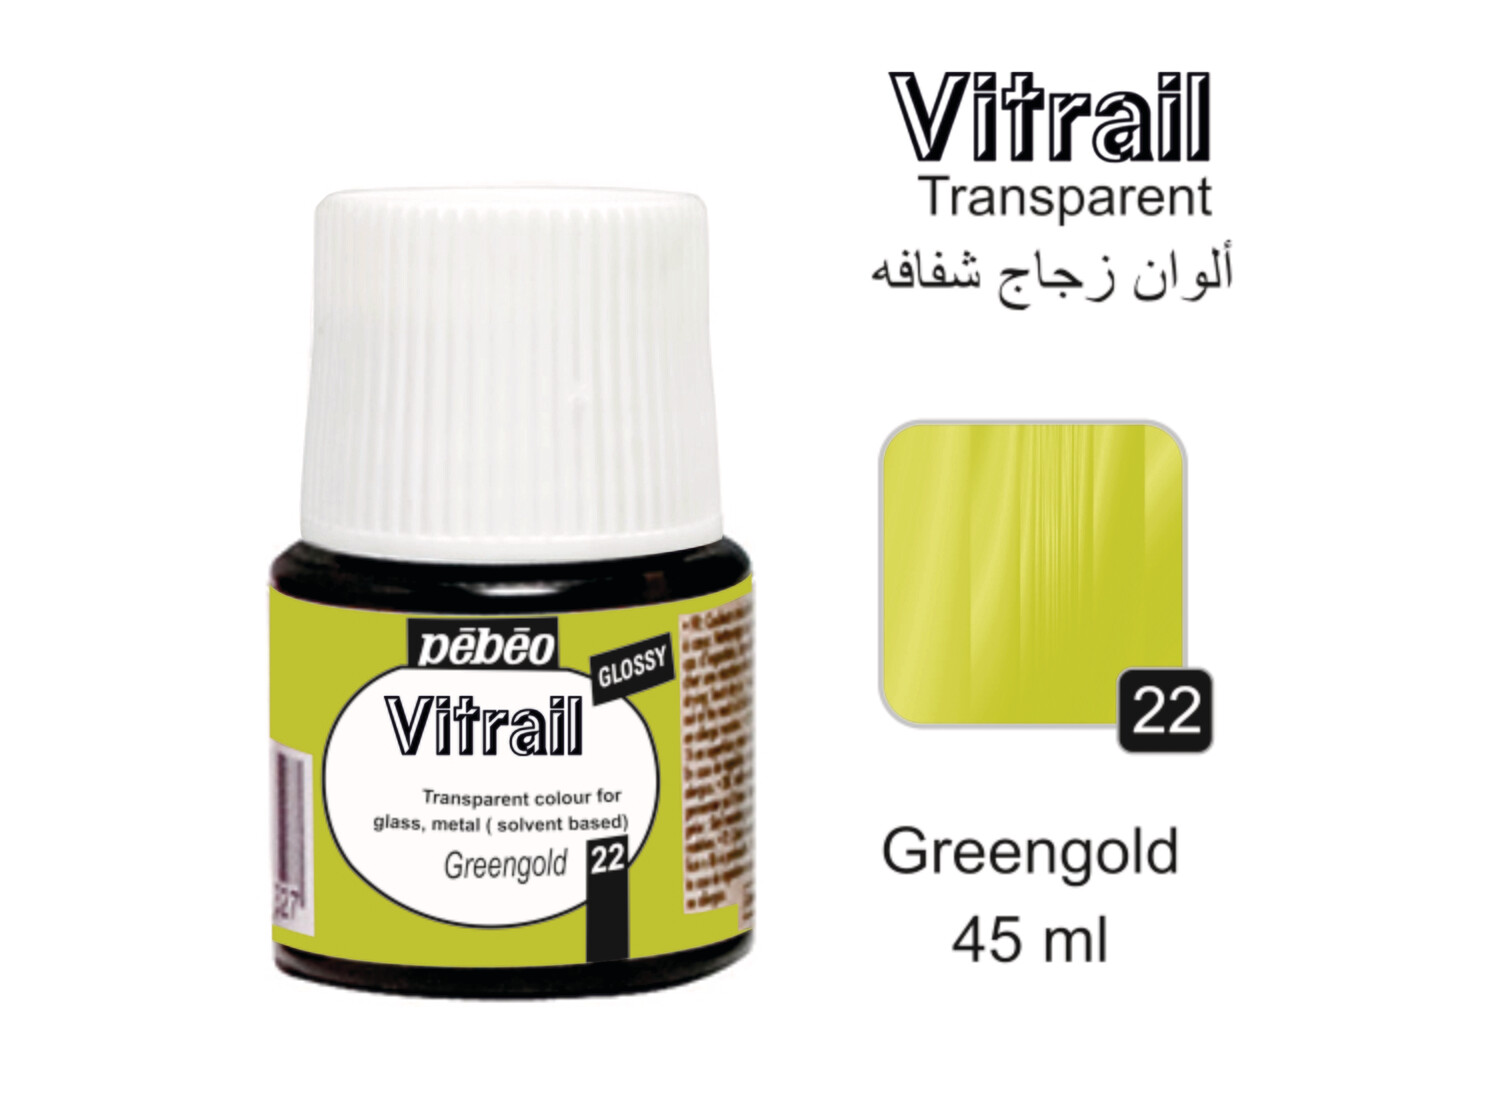 VITRAIL glass colors Greengold No. 22, 45 ml